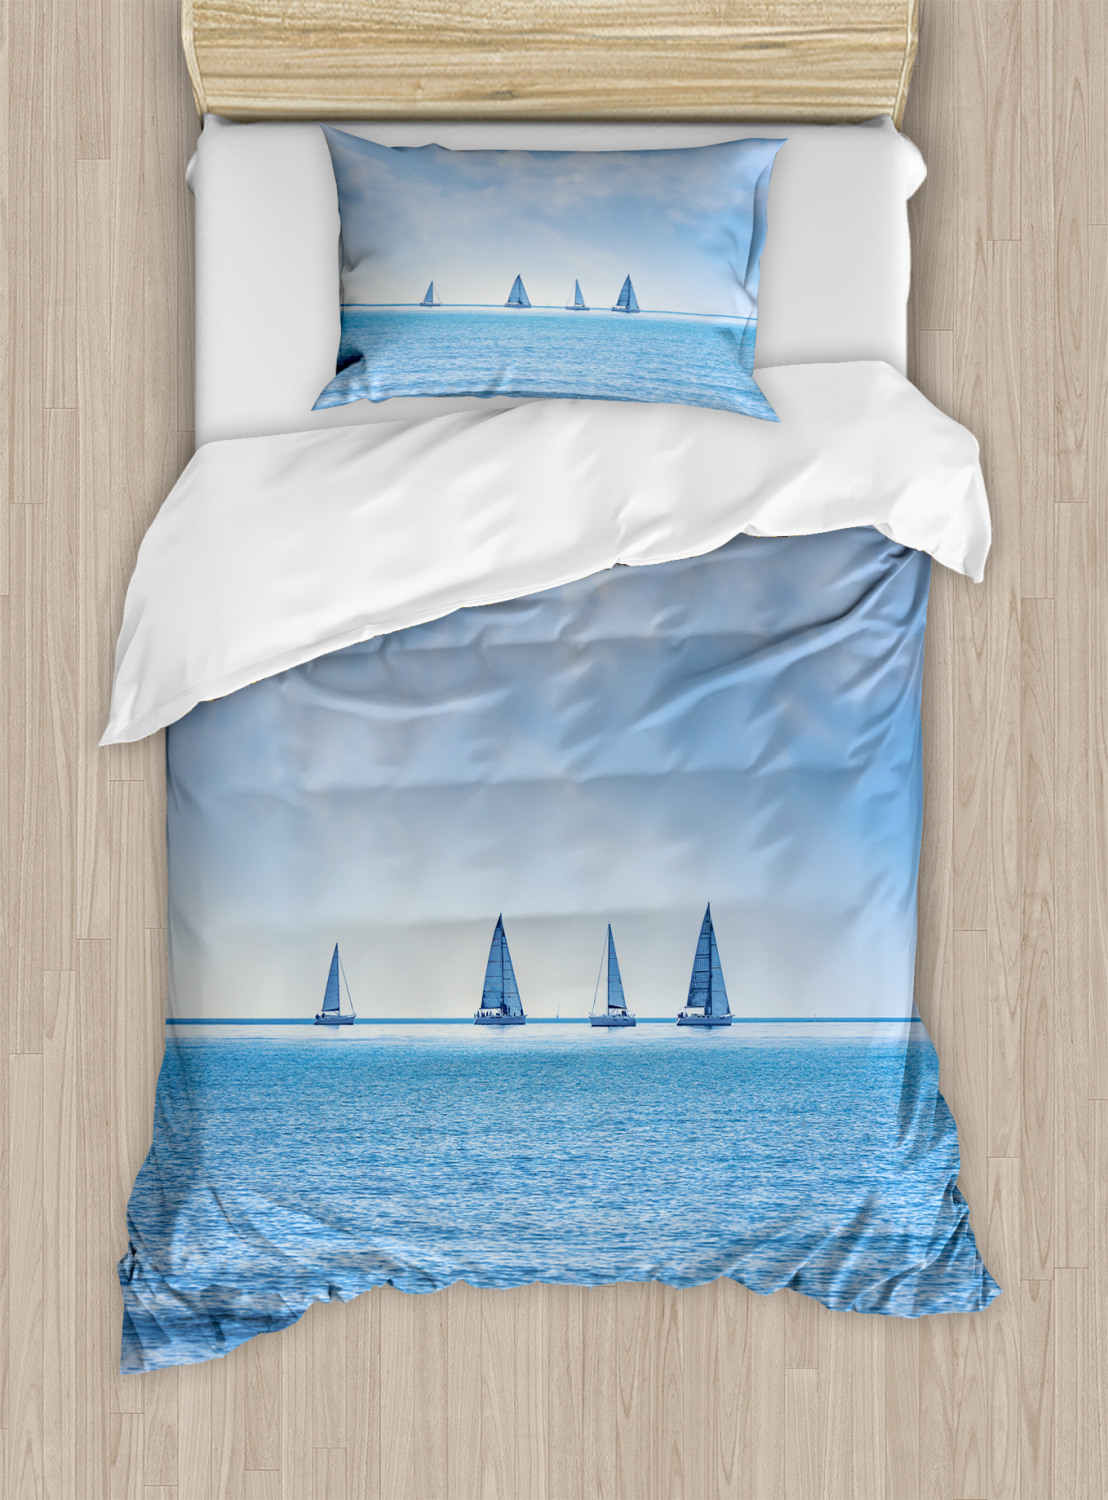 Nautical Ocean Duvet Cover Set Twin Queen King Sizes with Pillow Shams ...